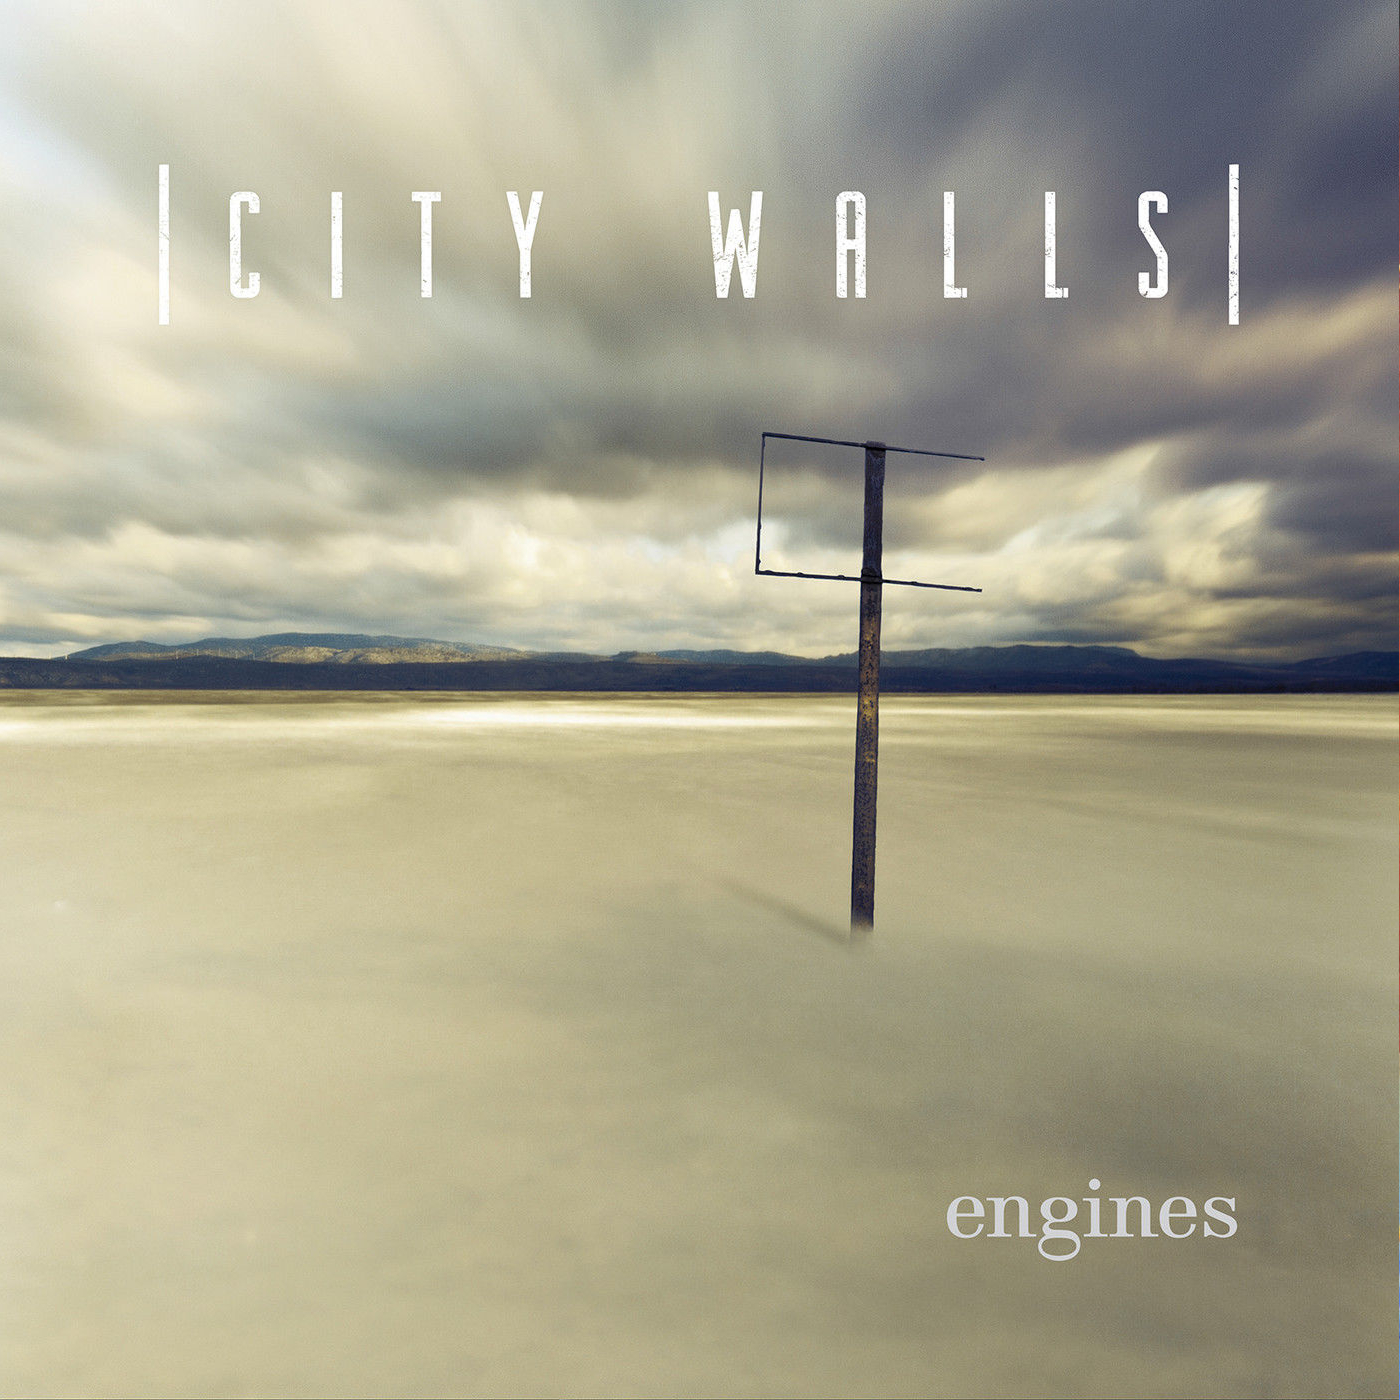 City Walls / Engines